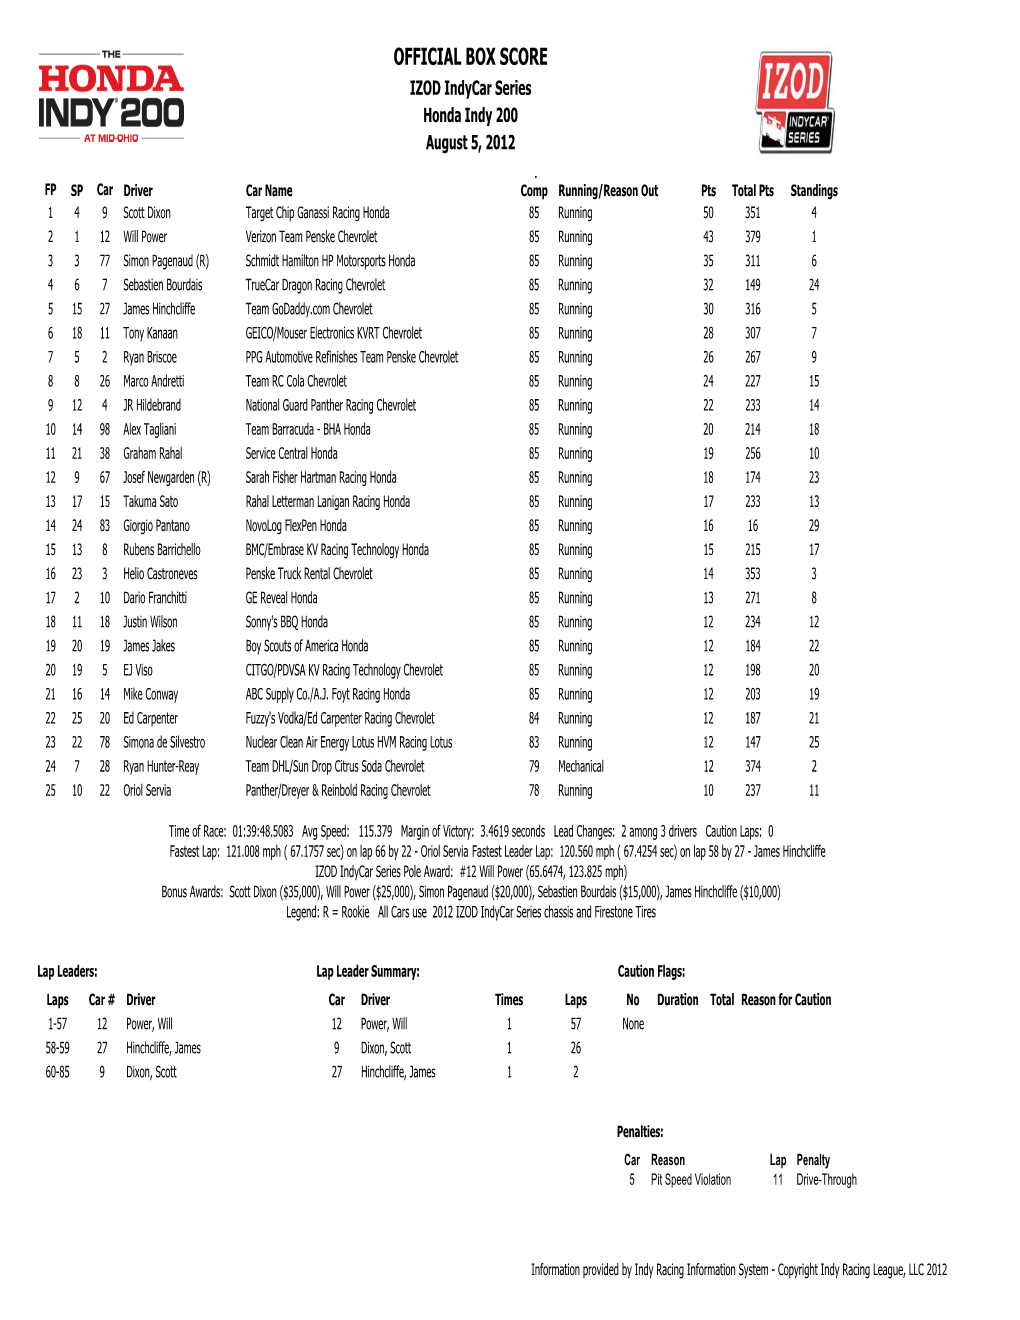 Honda Indy 200 Box Score